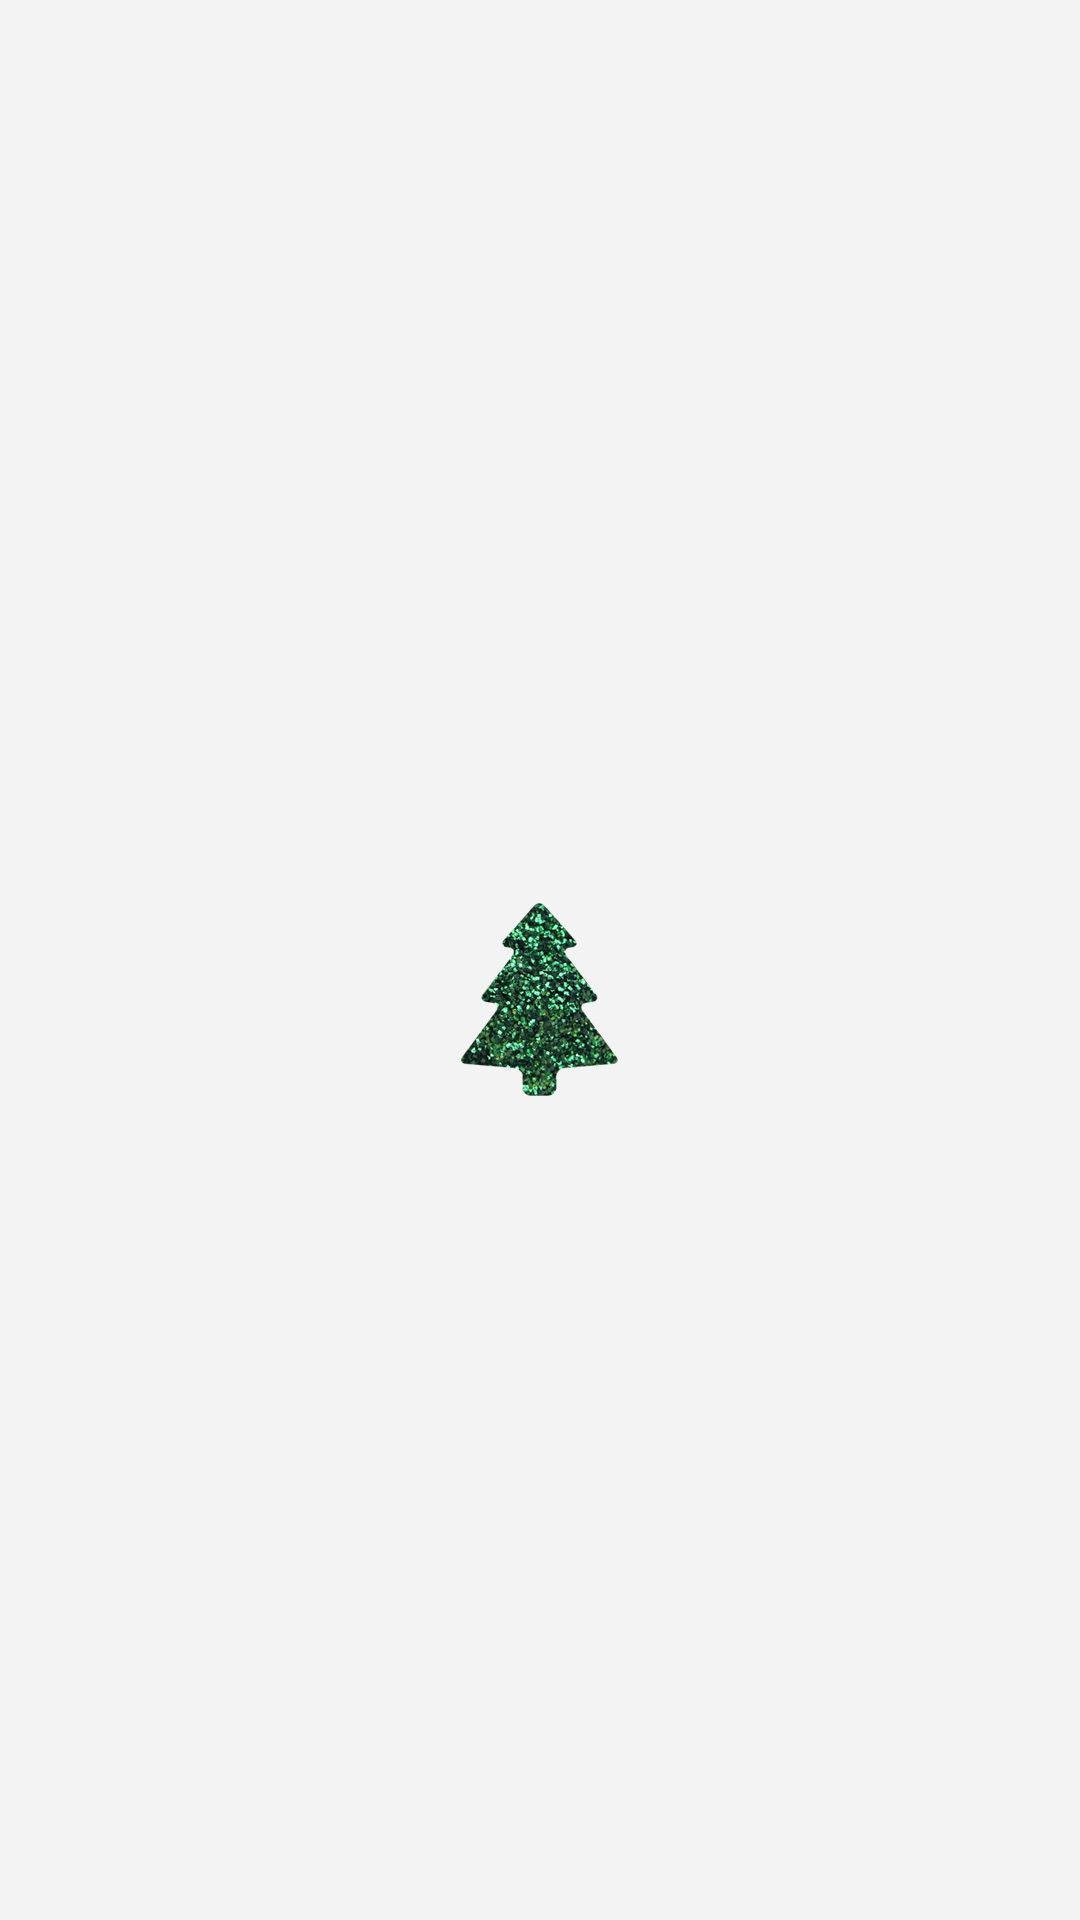 Simple Cute Christmas Iphone Single Tree Background